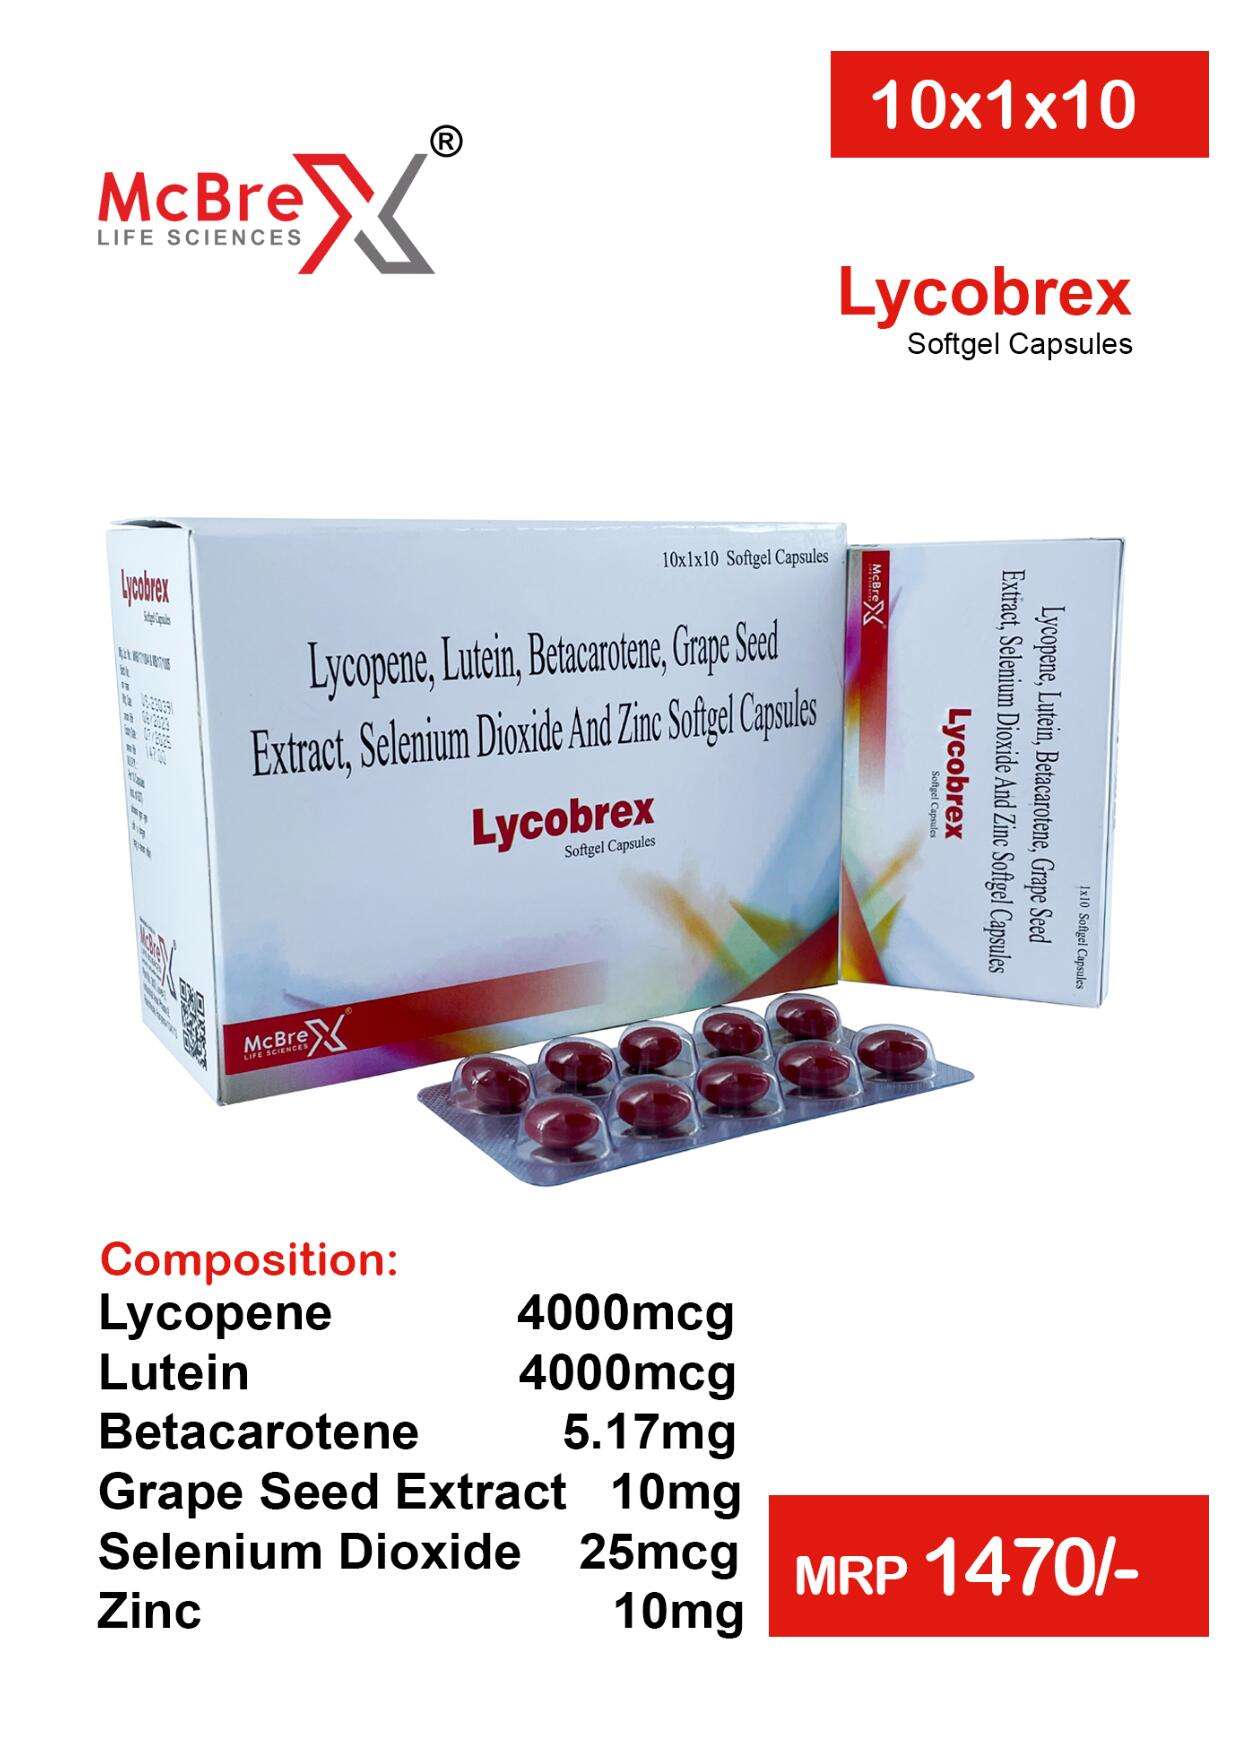 lycopene 10% 5000mcg. + grape seed extract 10mg. + betacarotene 10% 5.17mg. + lutein 8% 2000mcg.
+ zinc sulphate 10.80mg.